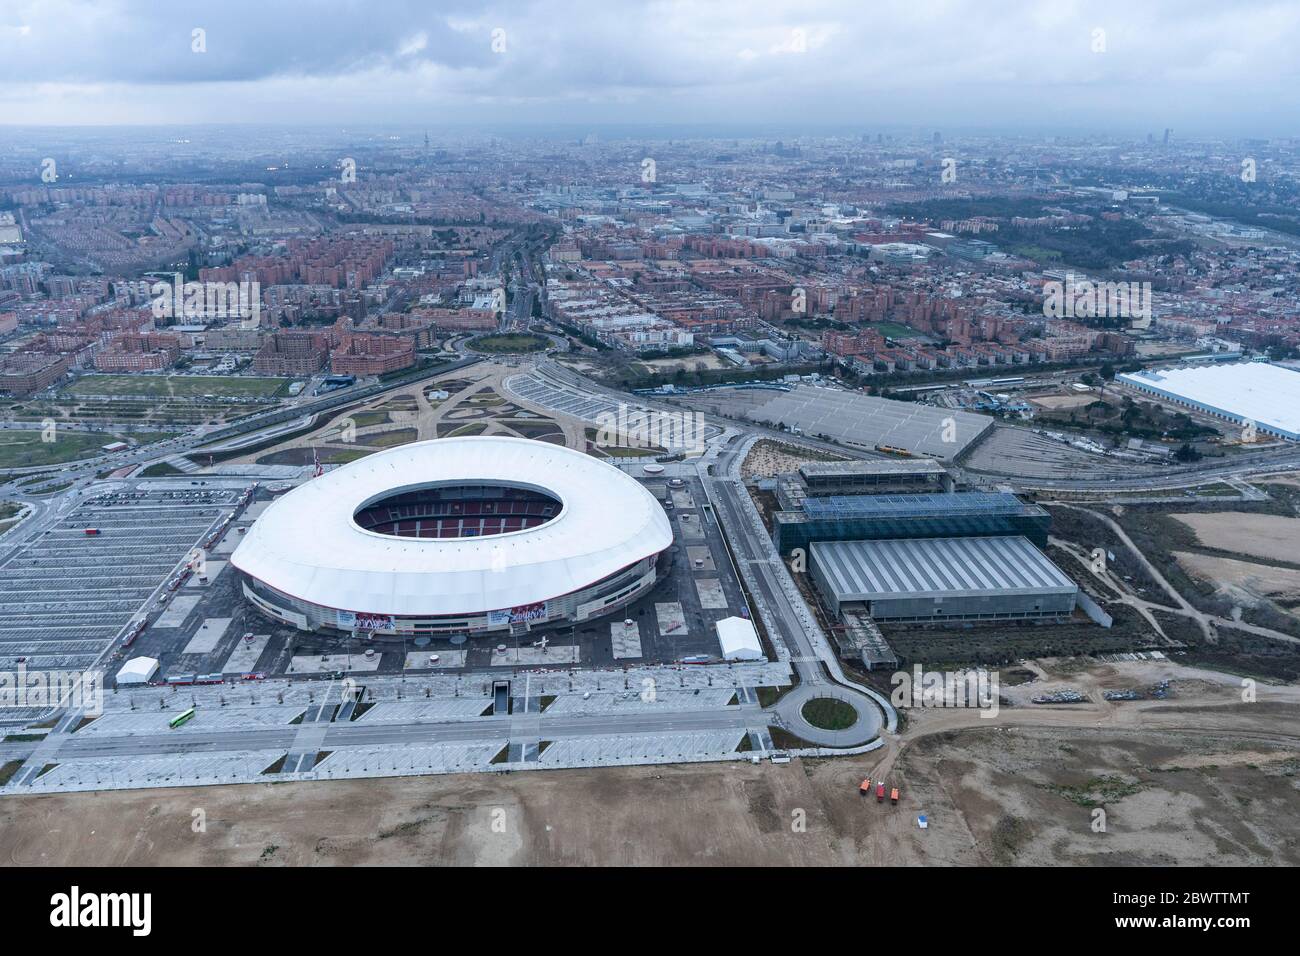 Spain, Madrid, Aerial view of Metropolitano Stadium Stock Photo